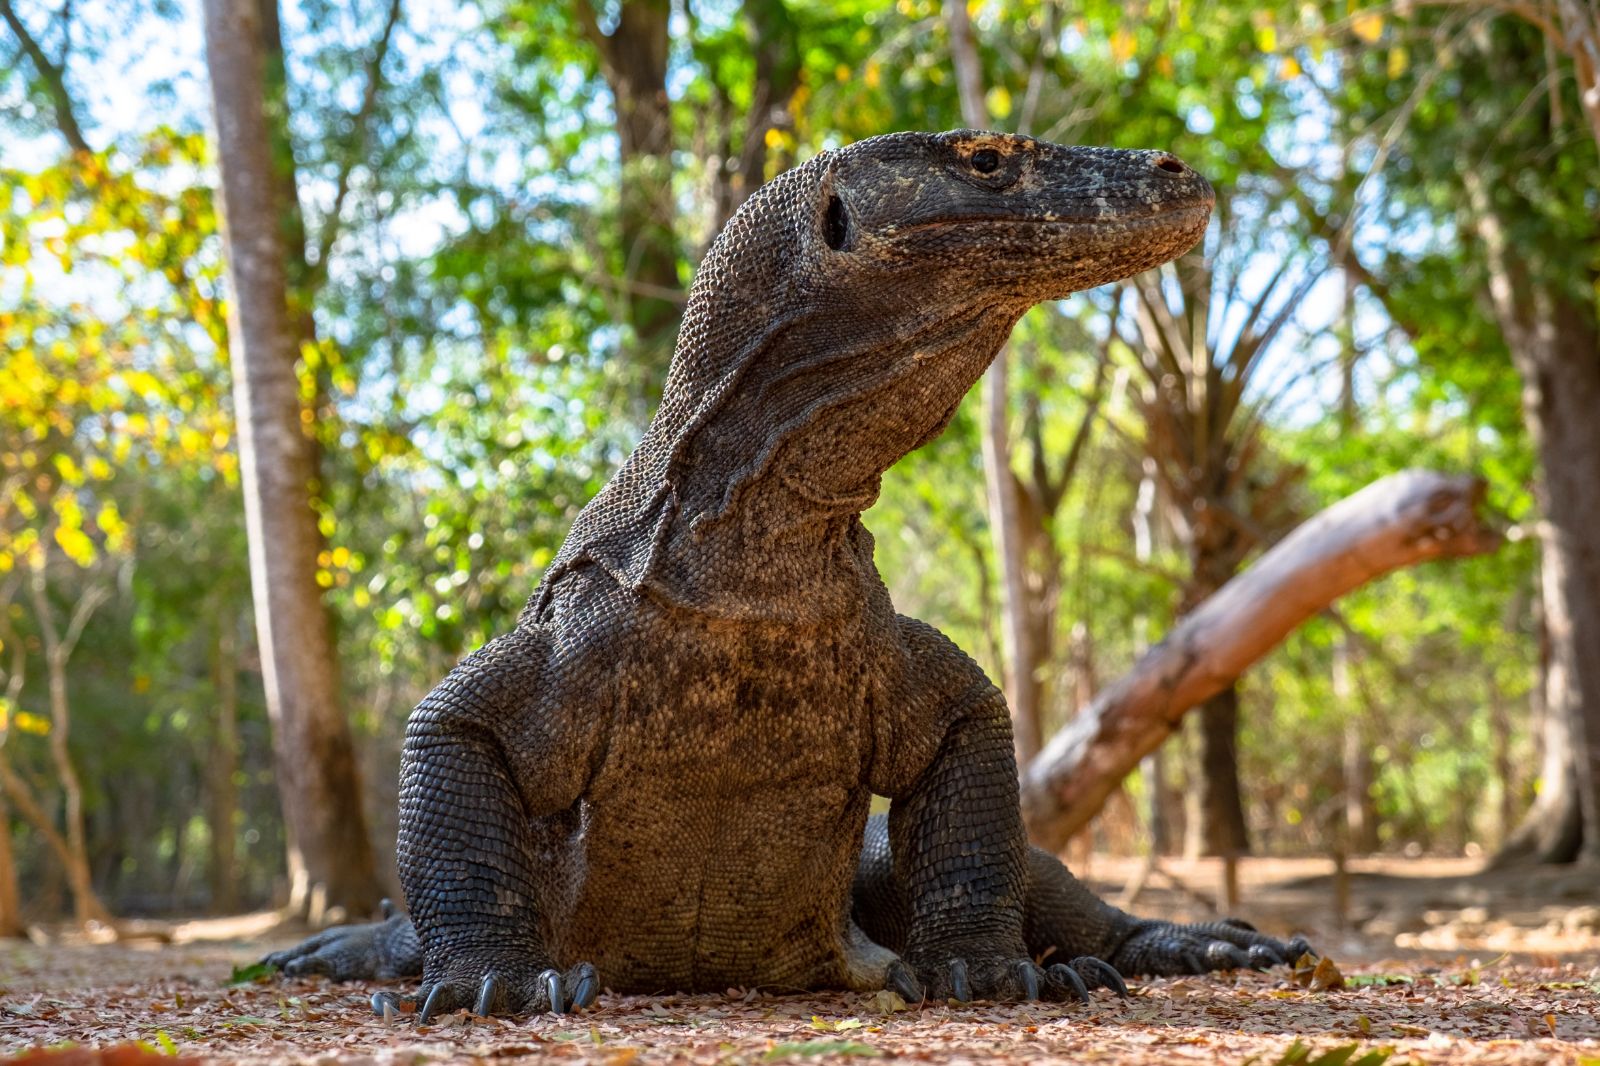 A Komodo dragon native to Komodo in Indonesia